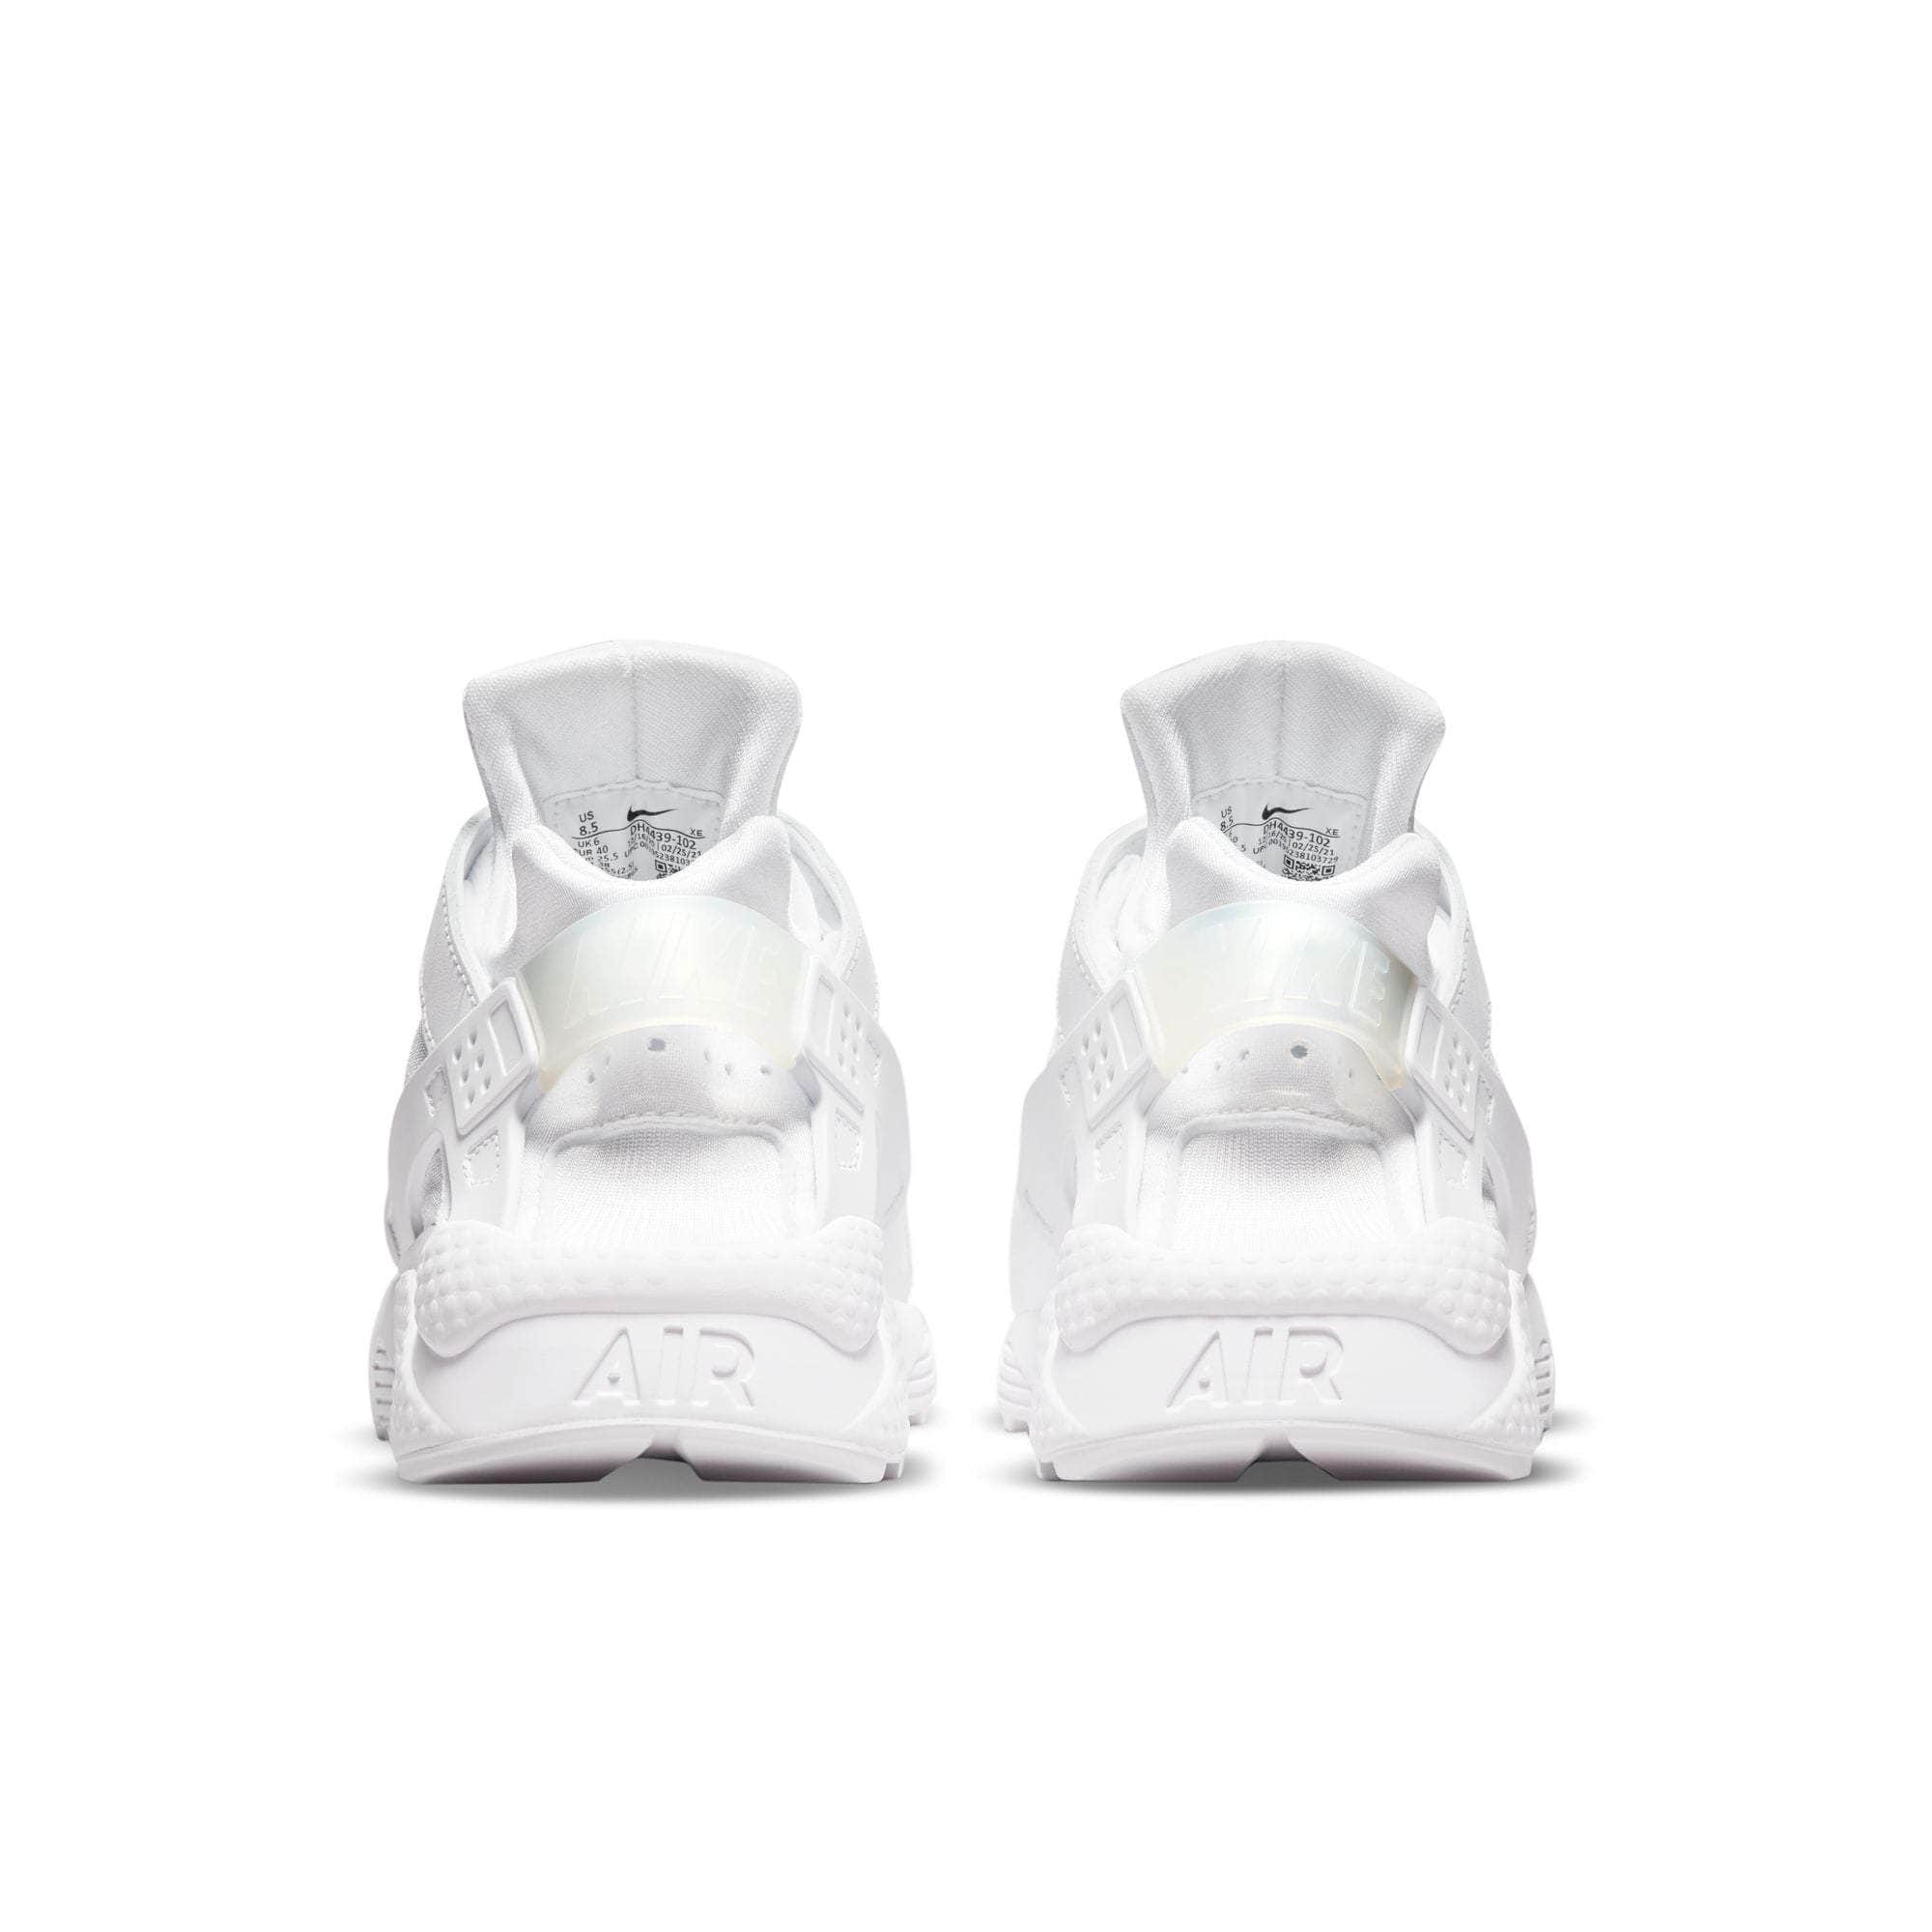 NIKE FOOTWEAR Nike Air Huarache "Triple White" - Women's